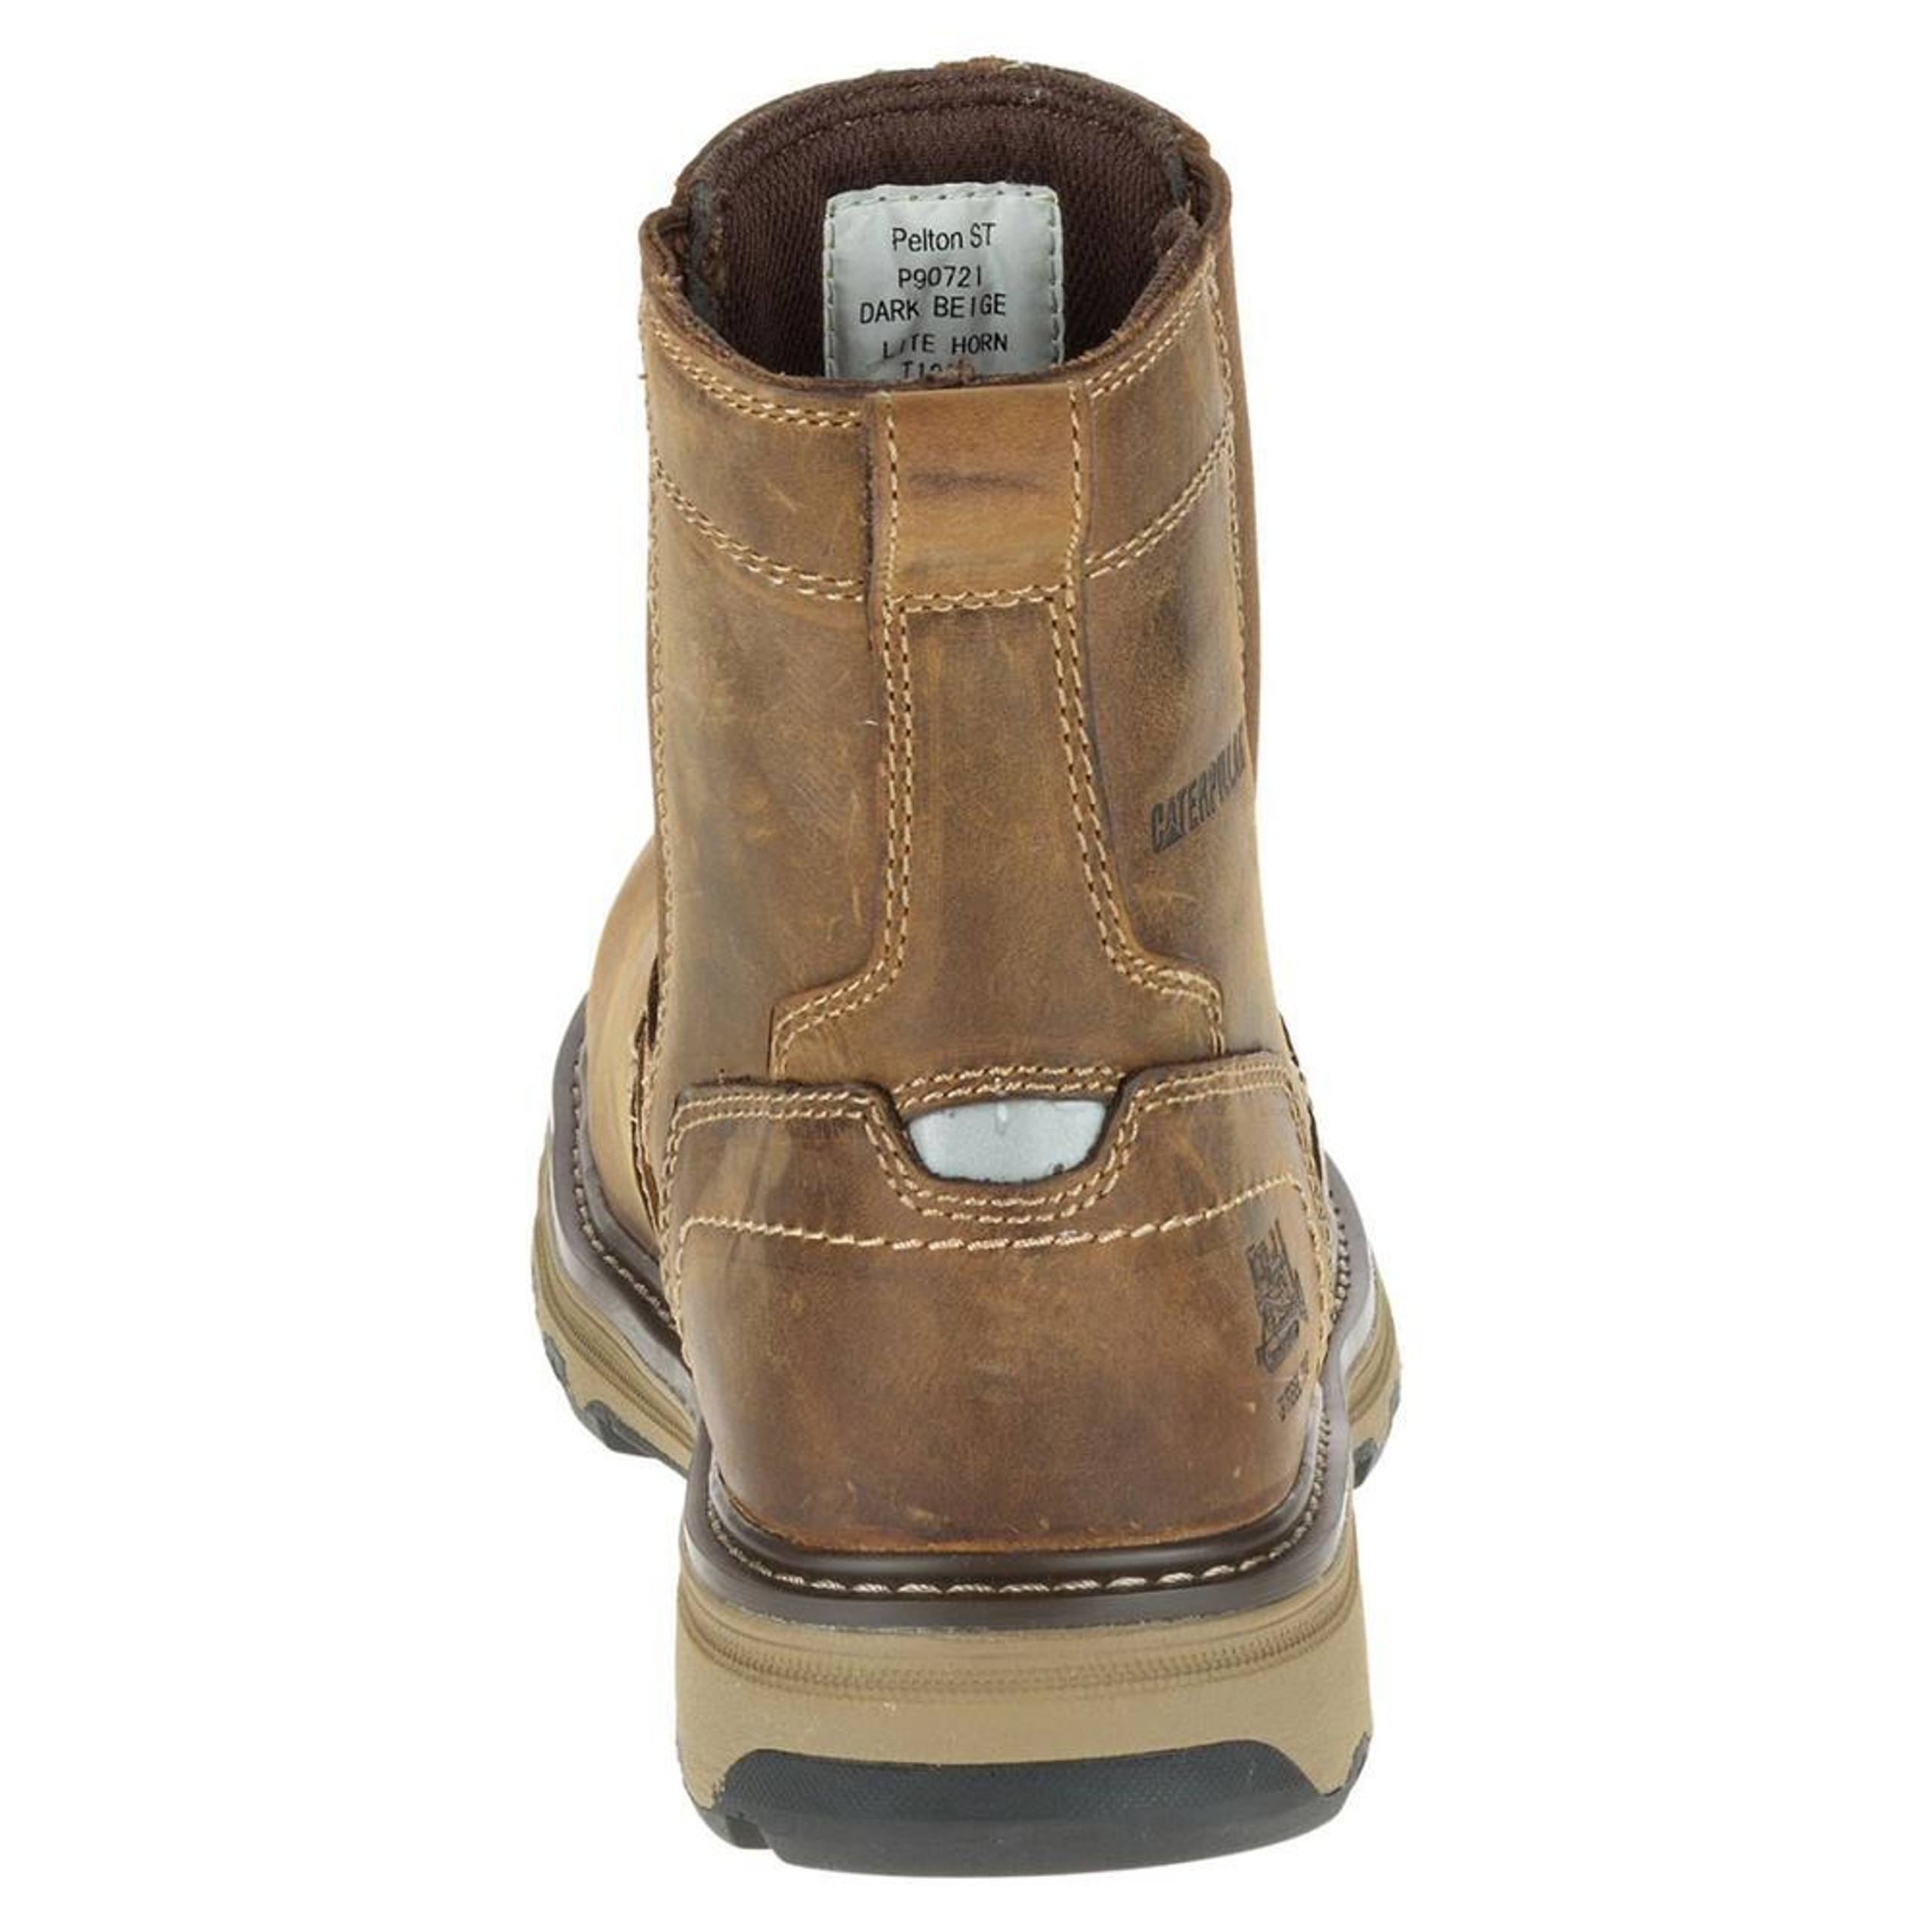 Caterpillar Pelton Dealer Safety Boots- Brown | ITS.co.uk